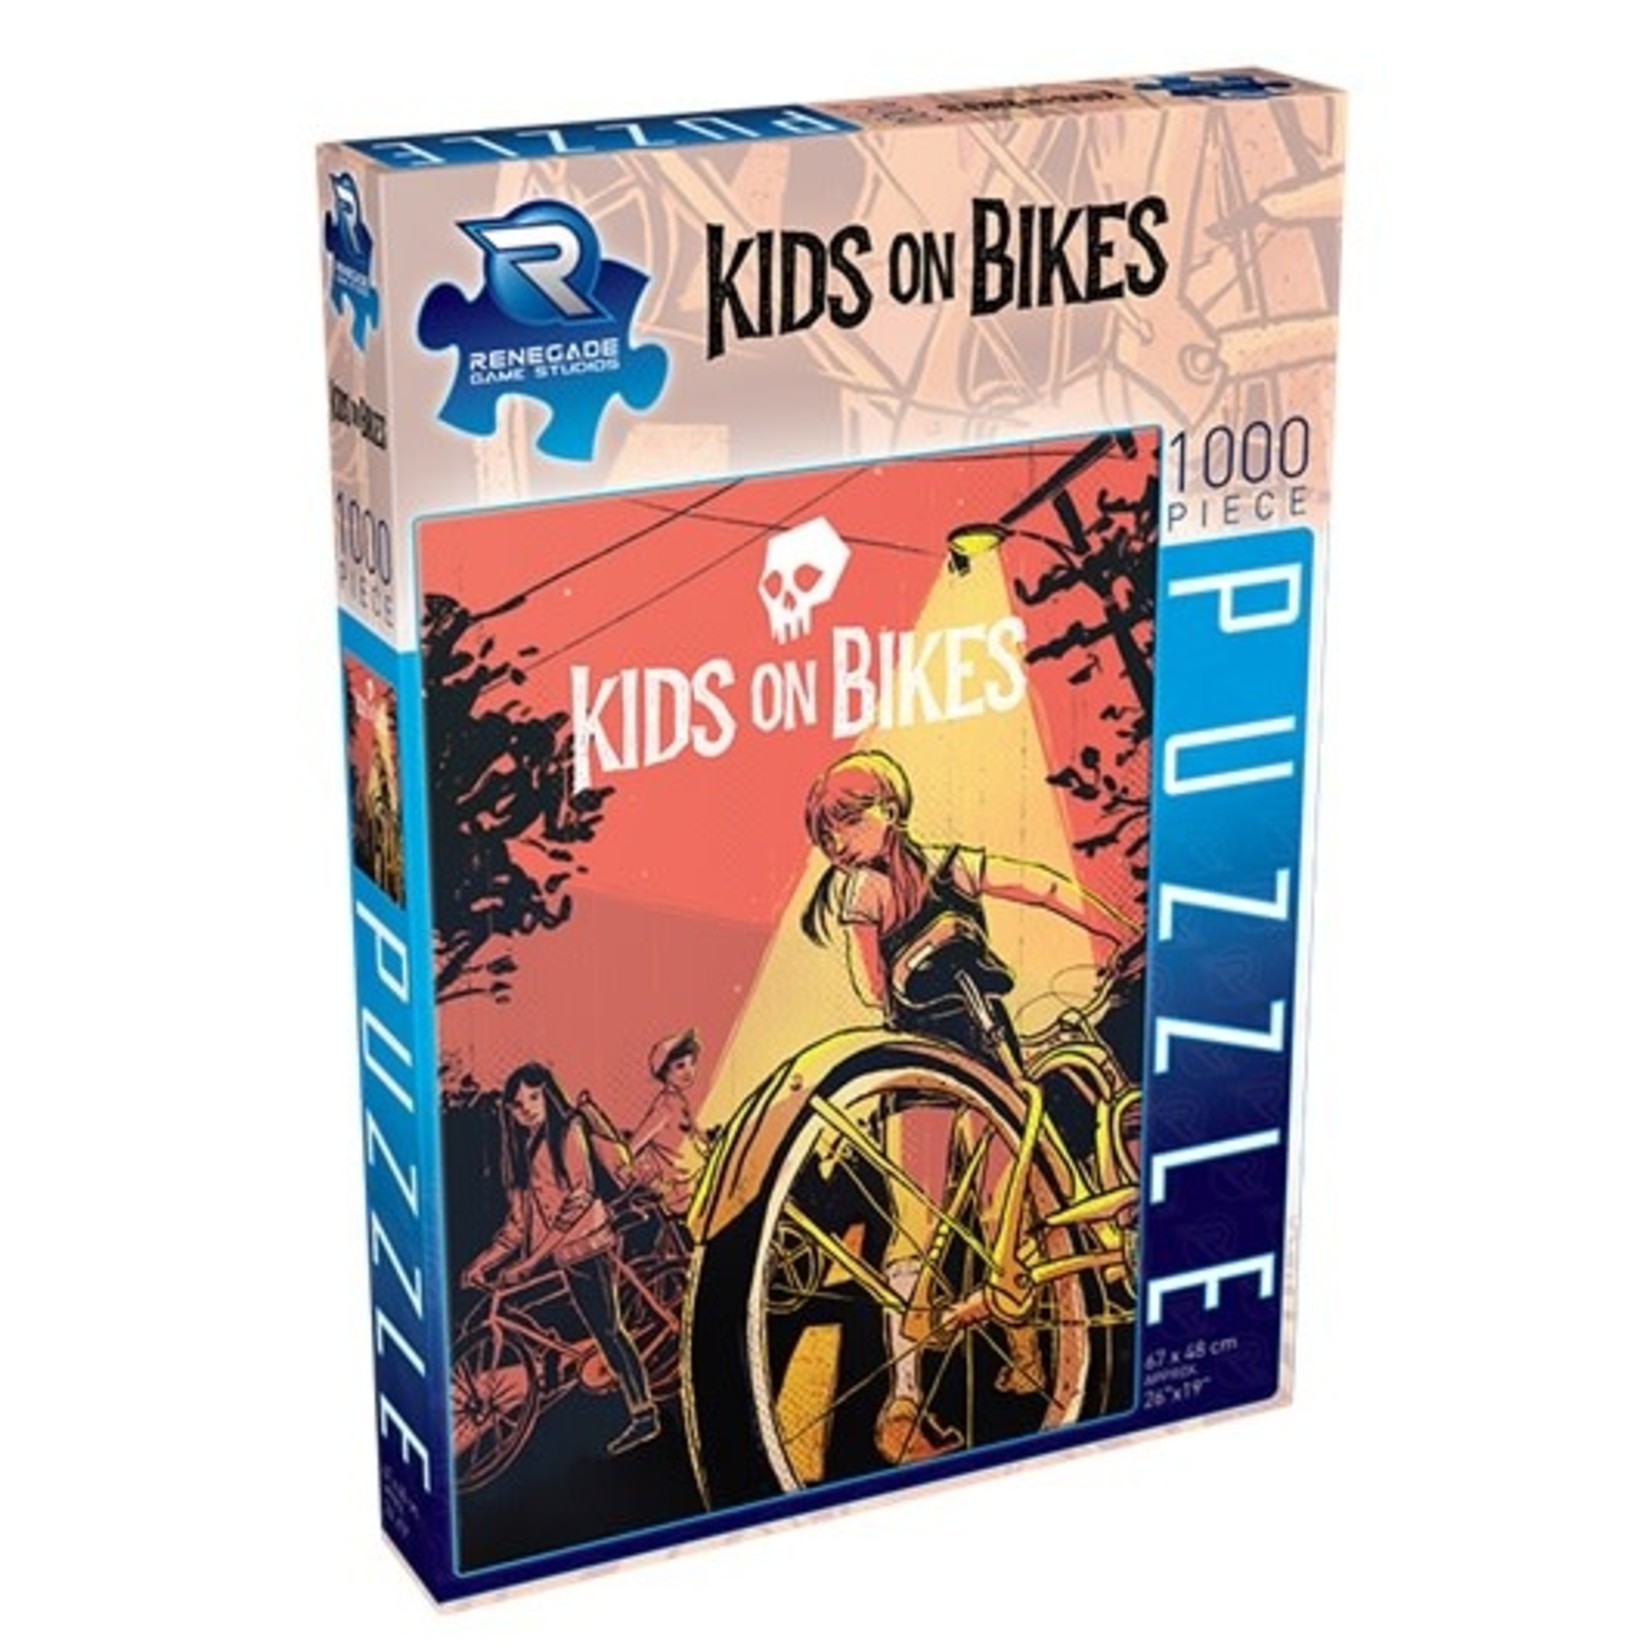 Renegade Kids on Bikes Puzzle (1000 Pieces)